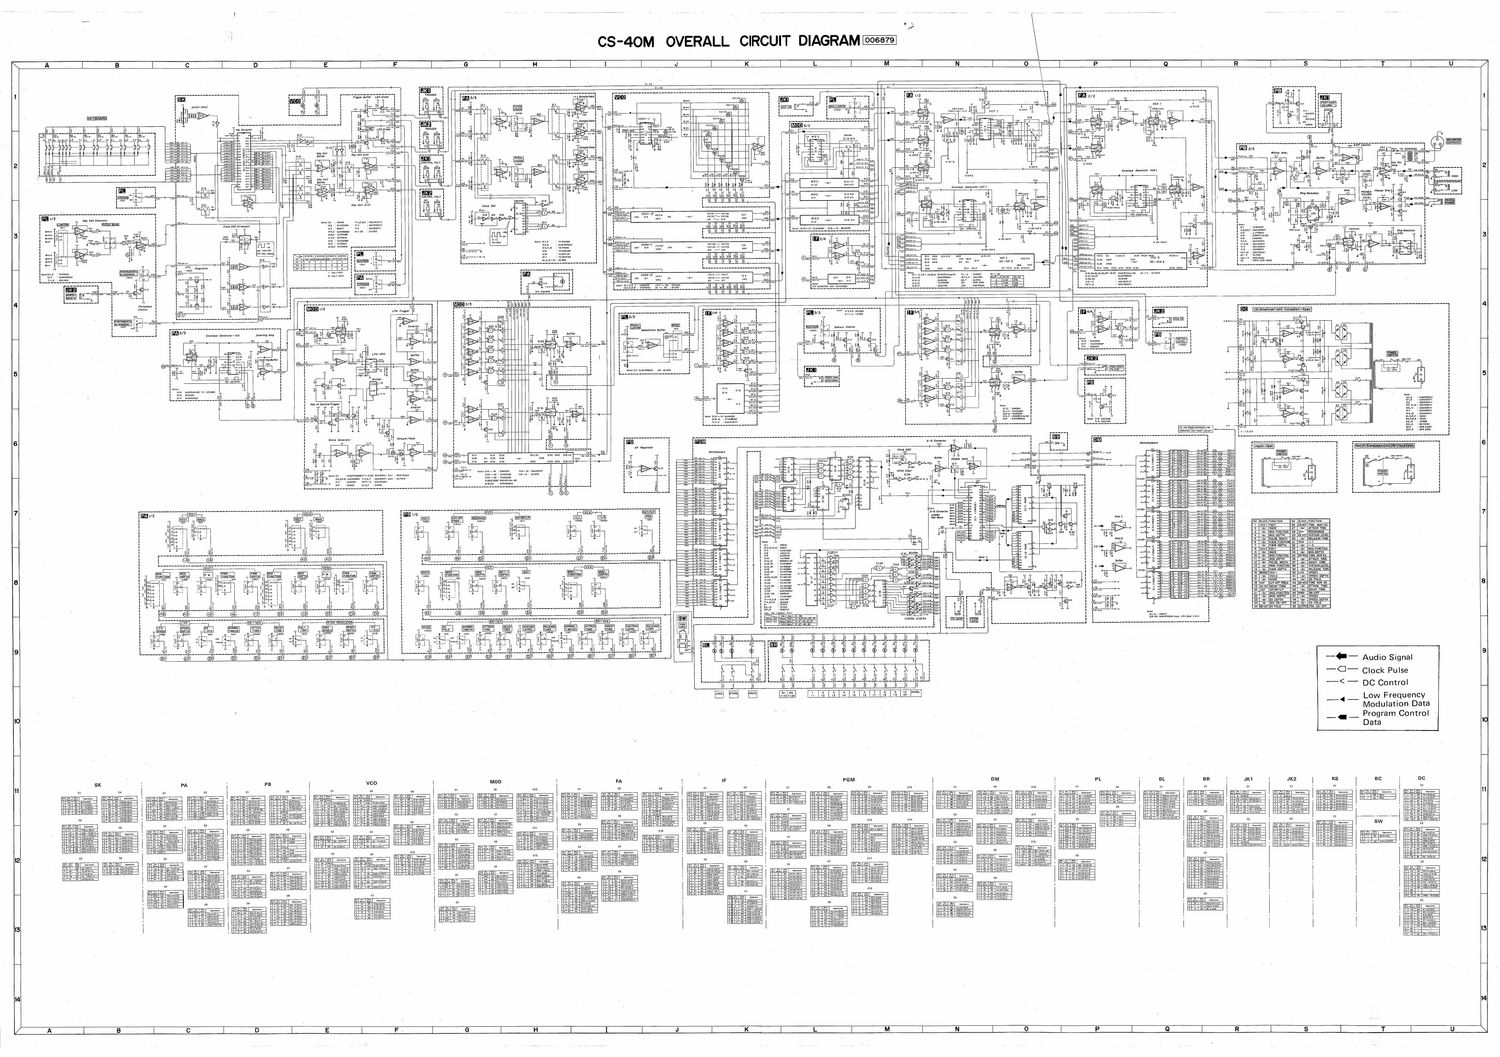 Yamaha CS 40M Overall Circuit Diagram